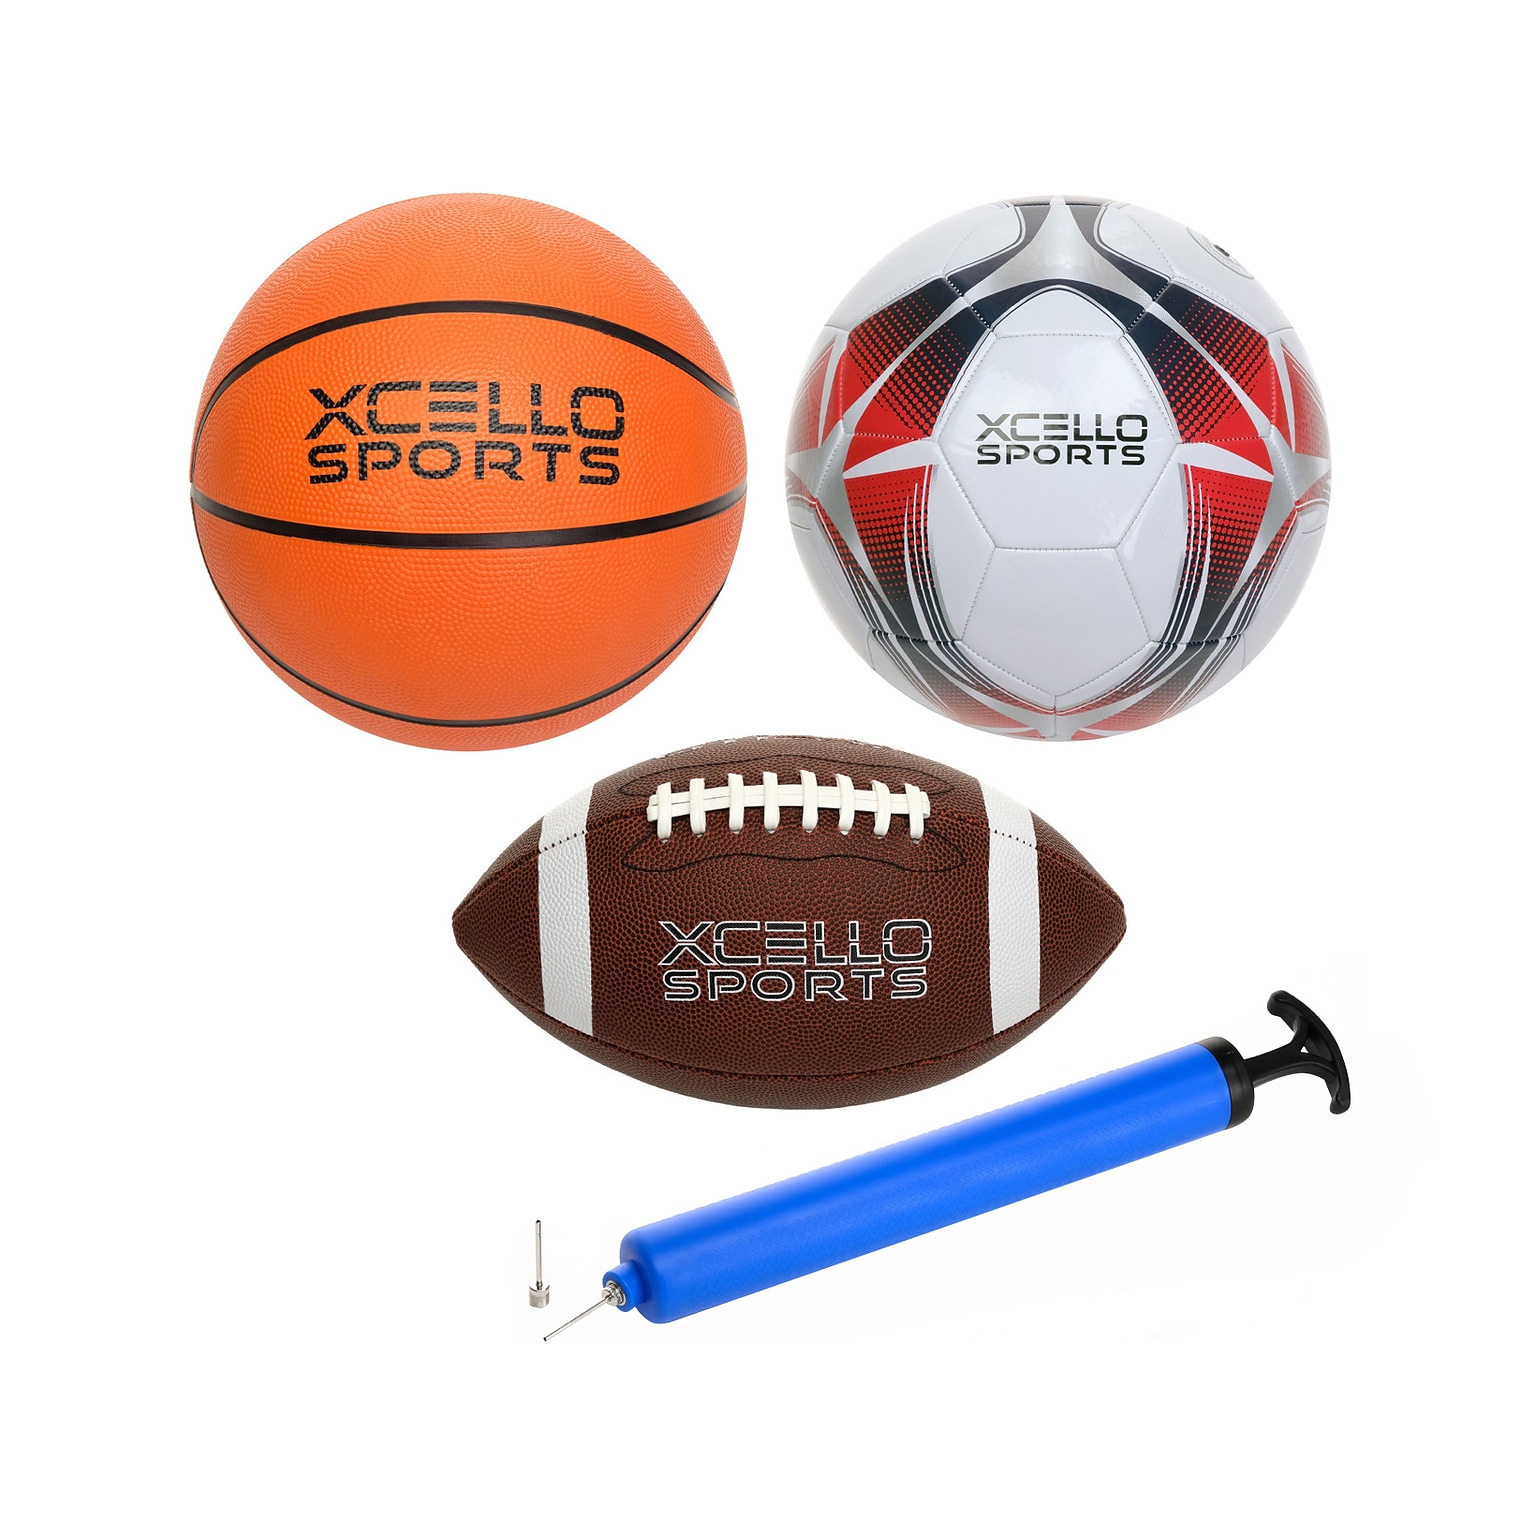 Xcello Sports Multisport 3-Ball Assortment Set, Assorted Colors (XS-SB-BB-JRFB-3)